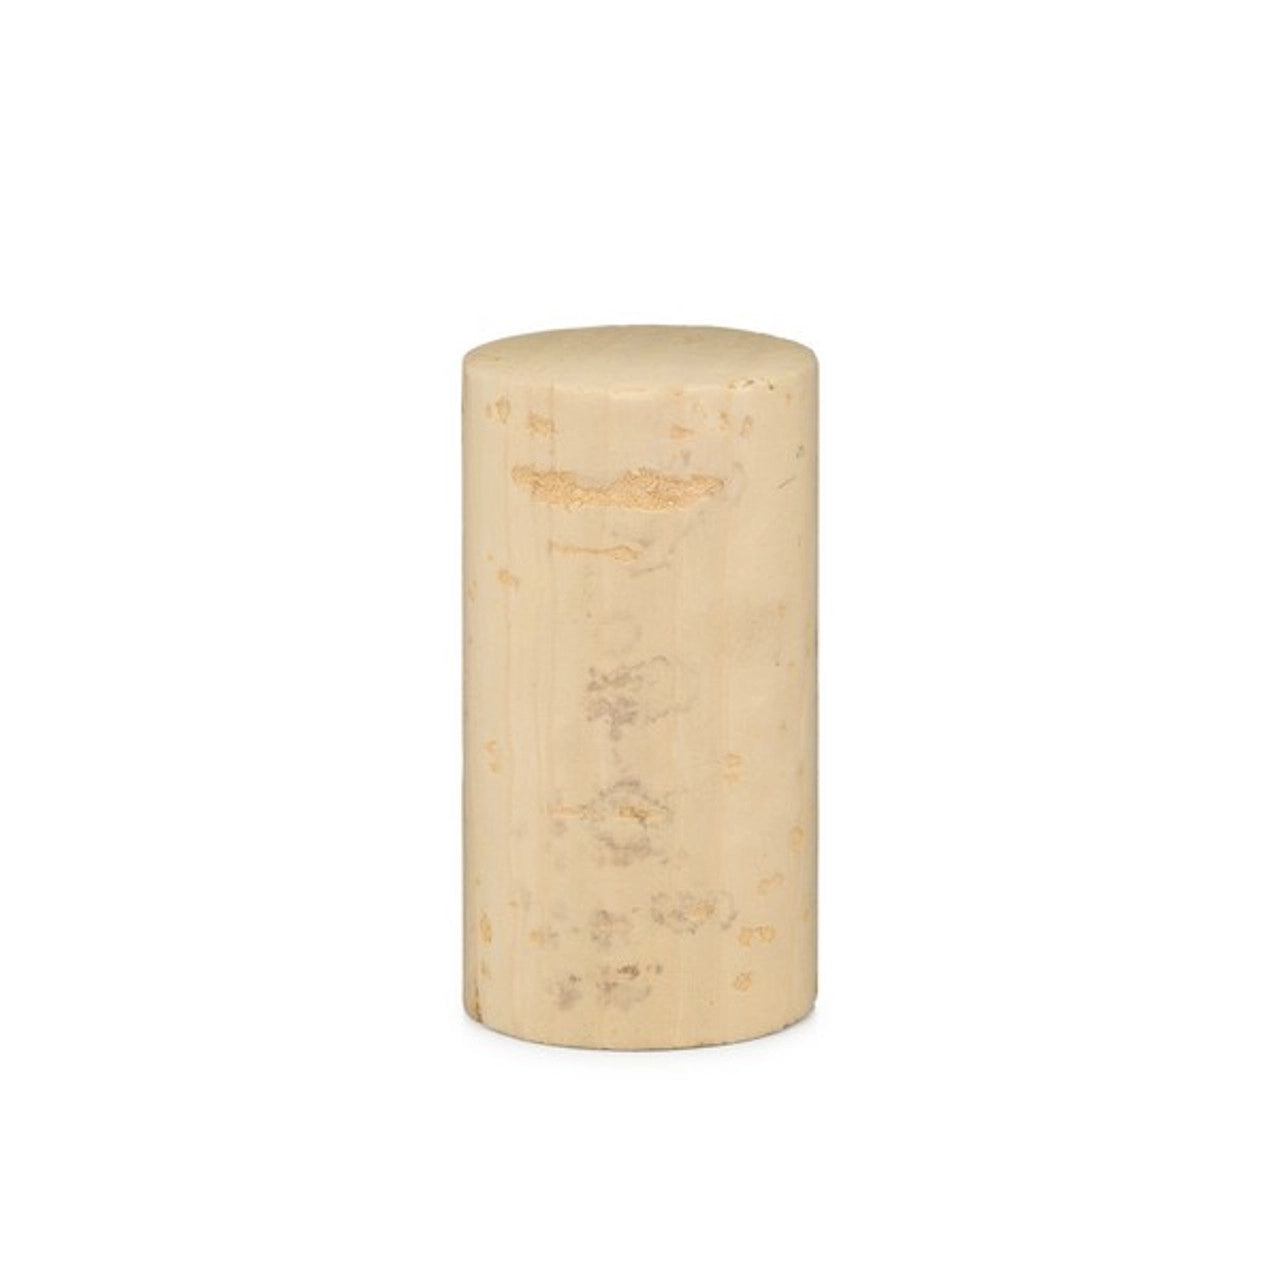 100 count Standard #9 45x24mm Natural Cork